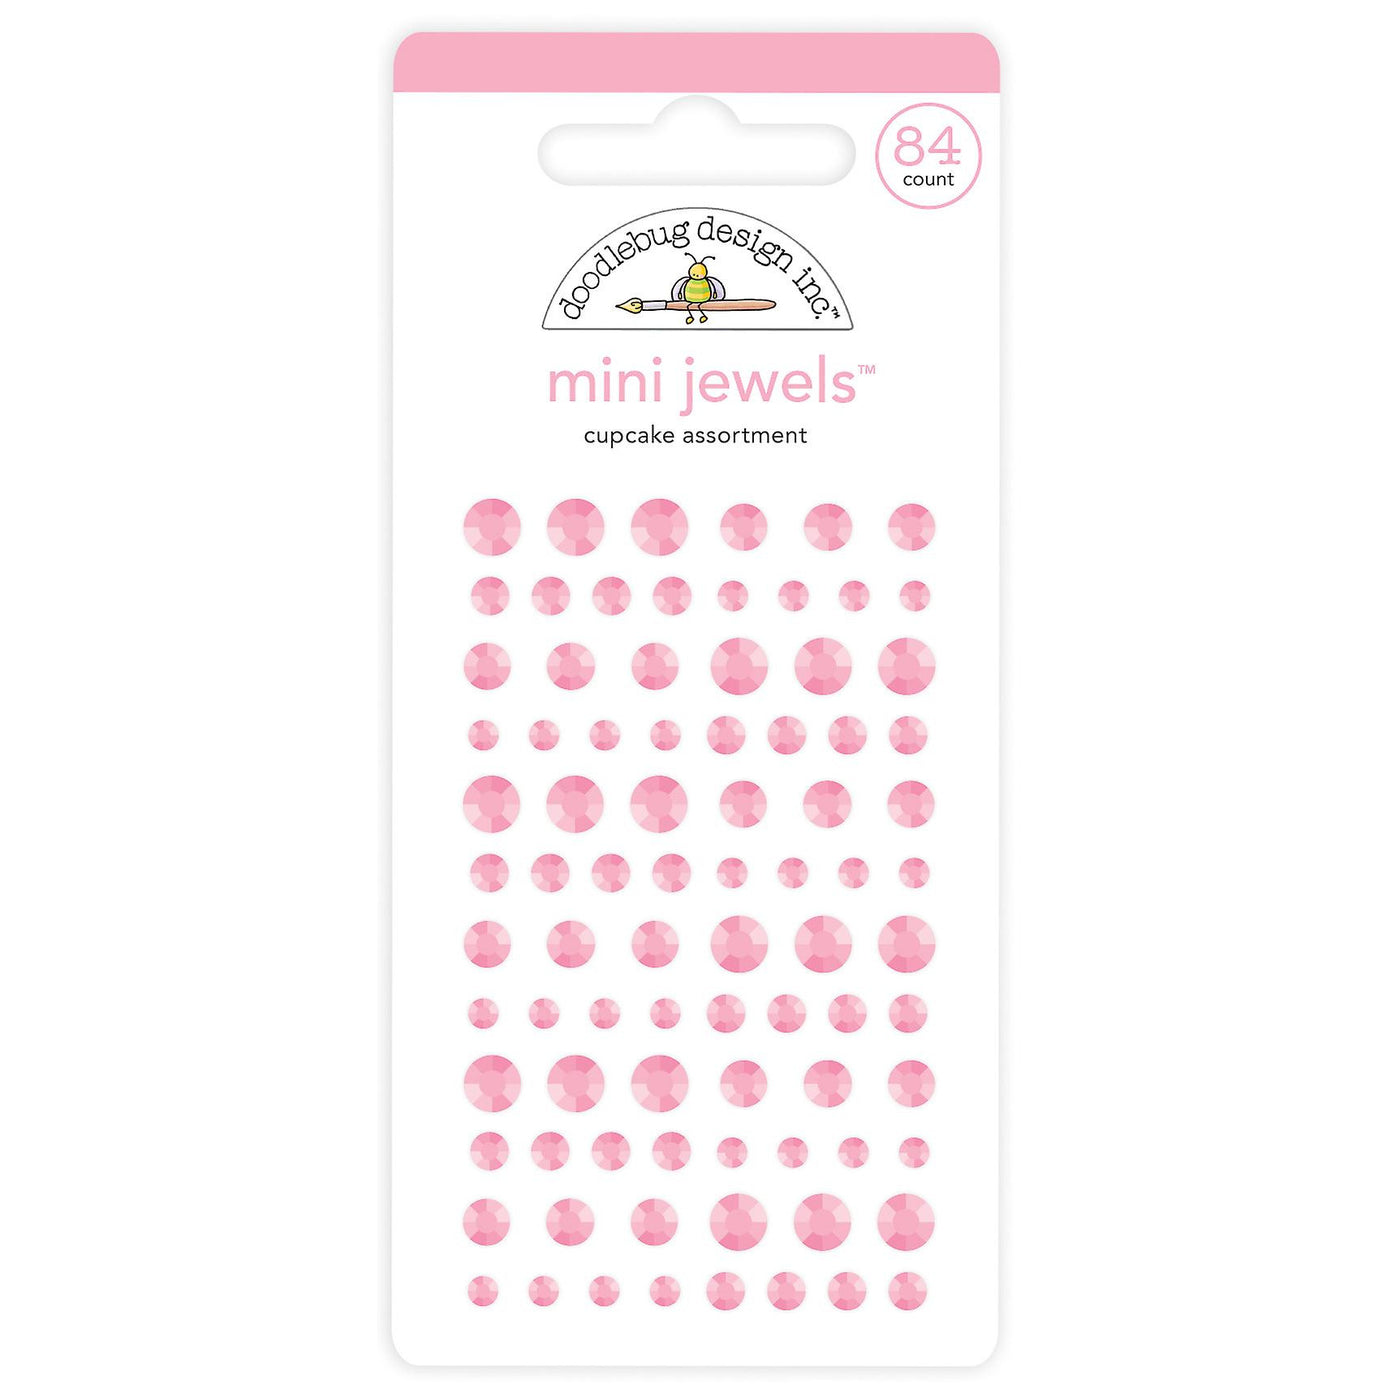 Cupcake Mini Jewels - 84 pink rhinestone stickers in three sizes - Doodlebug Design